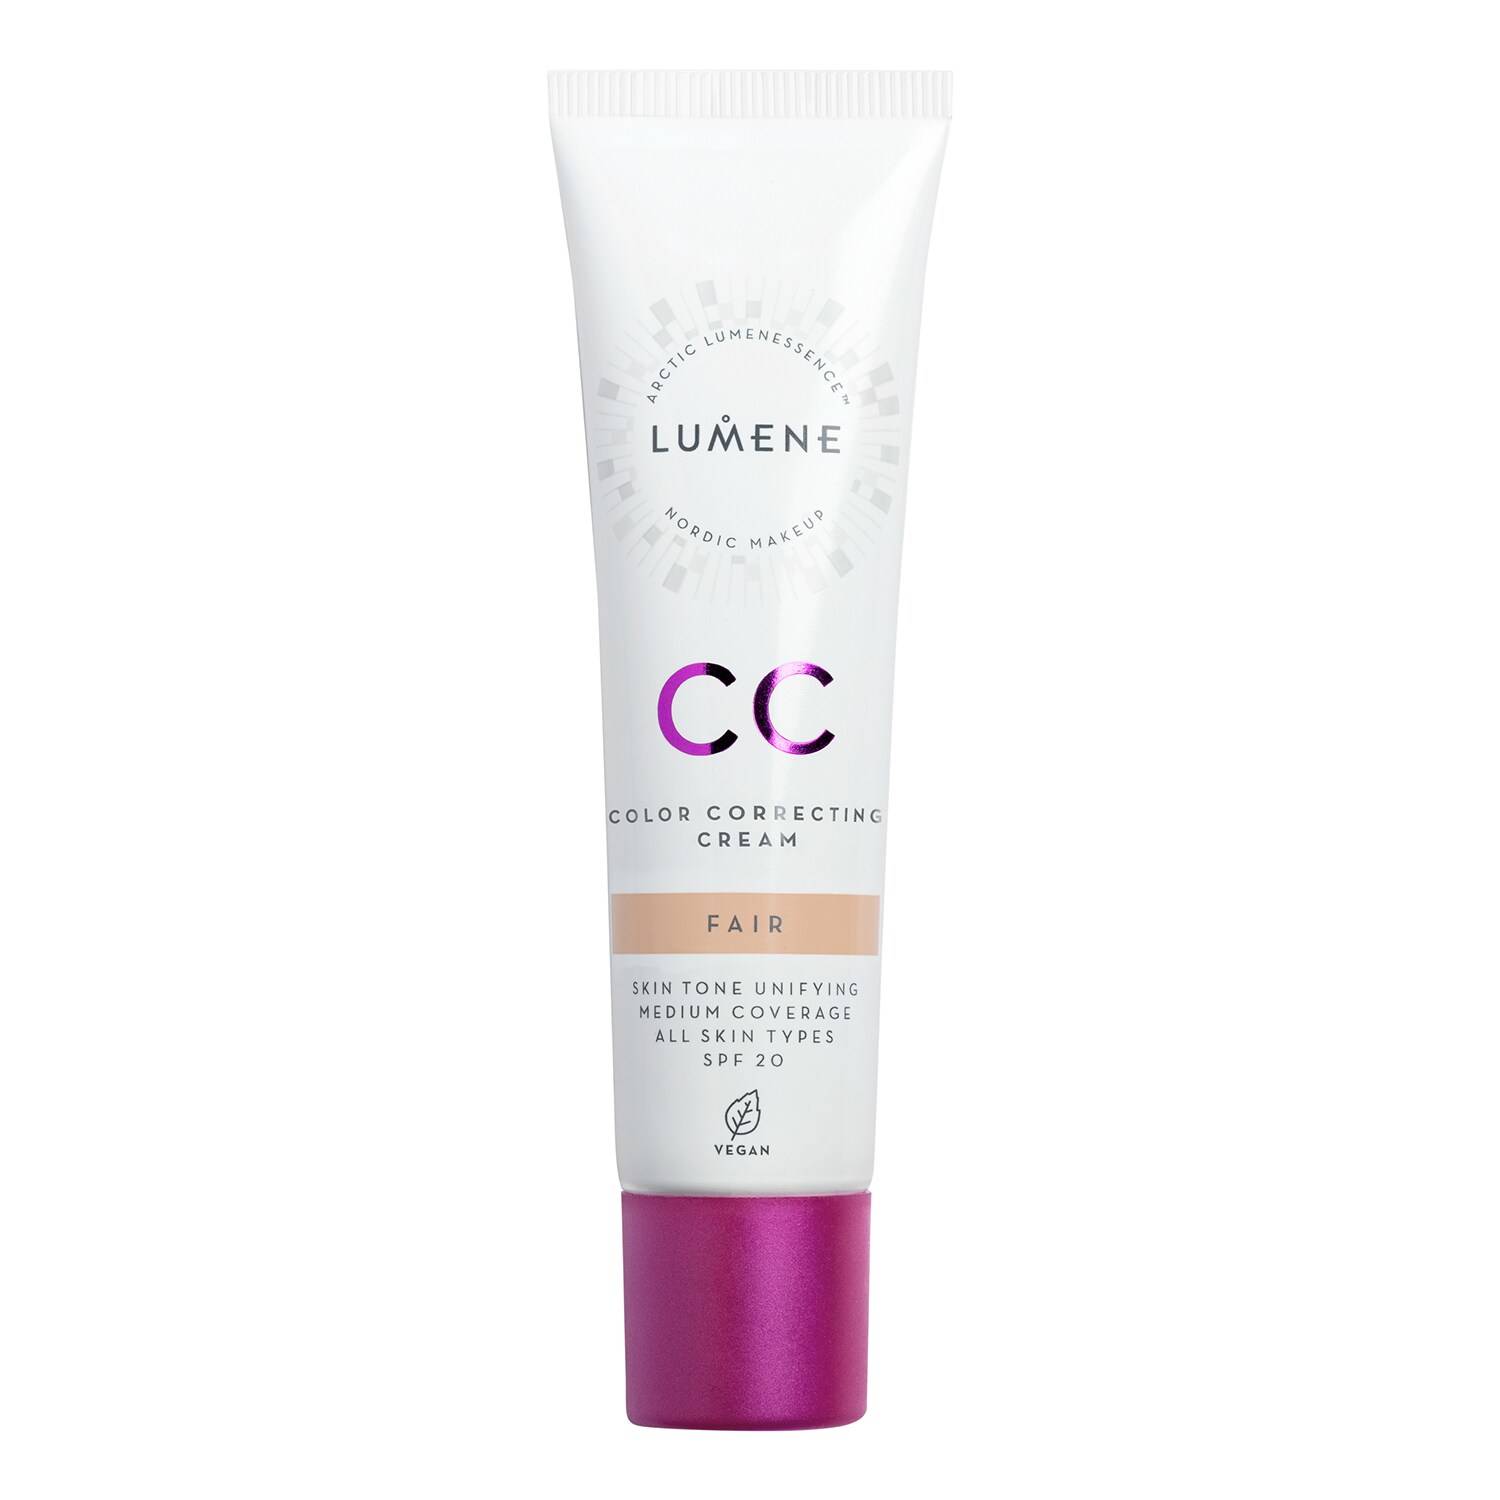 Lumene Cc Color Correcting Cream Spf20 30Ml Shade Fair